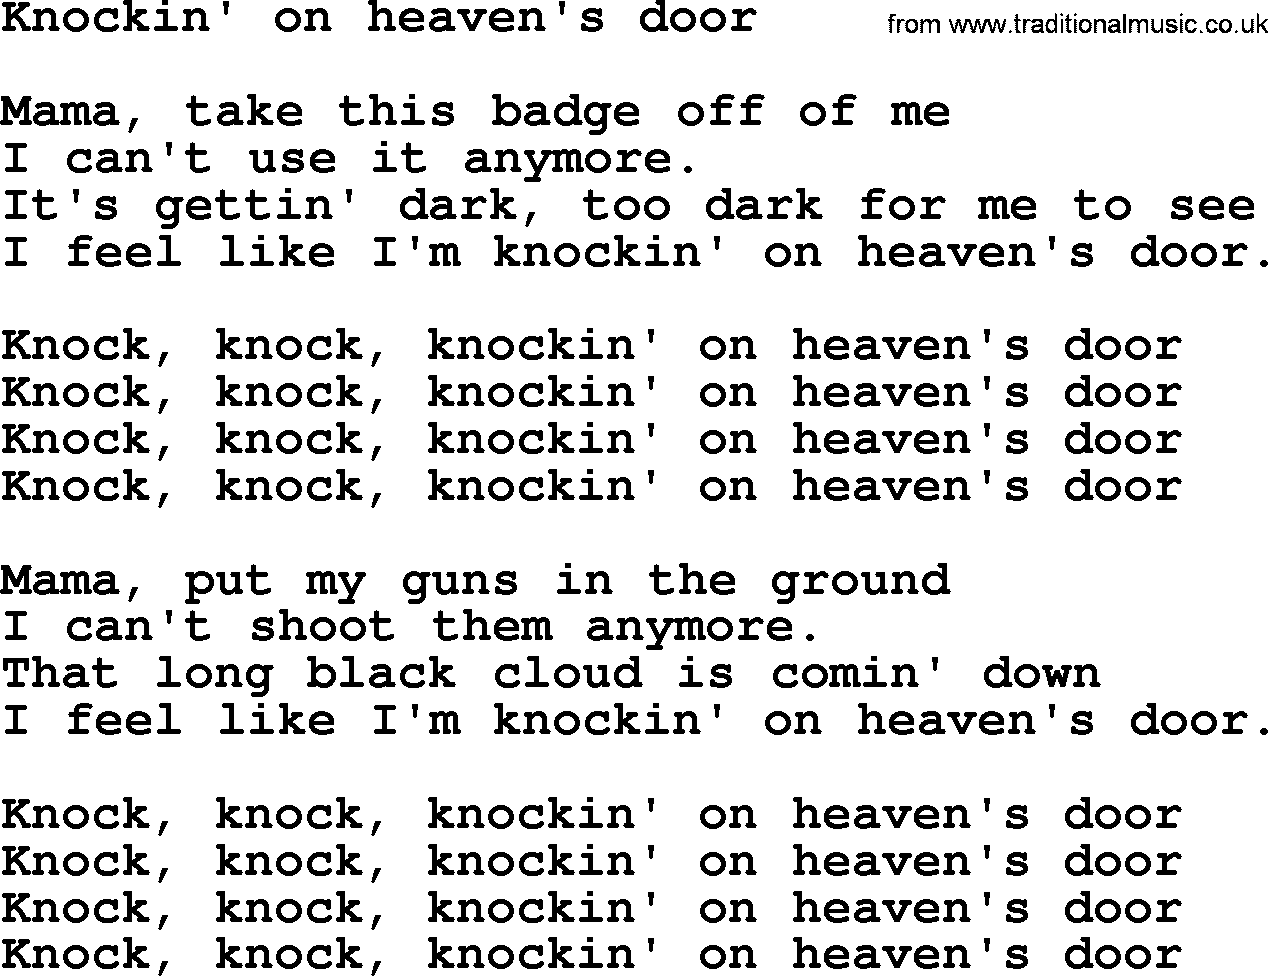 Bruce Springsteen song: Knockin' On Heaven's Door lyrics